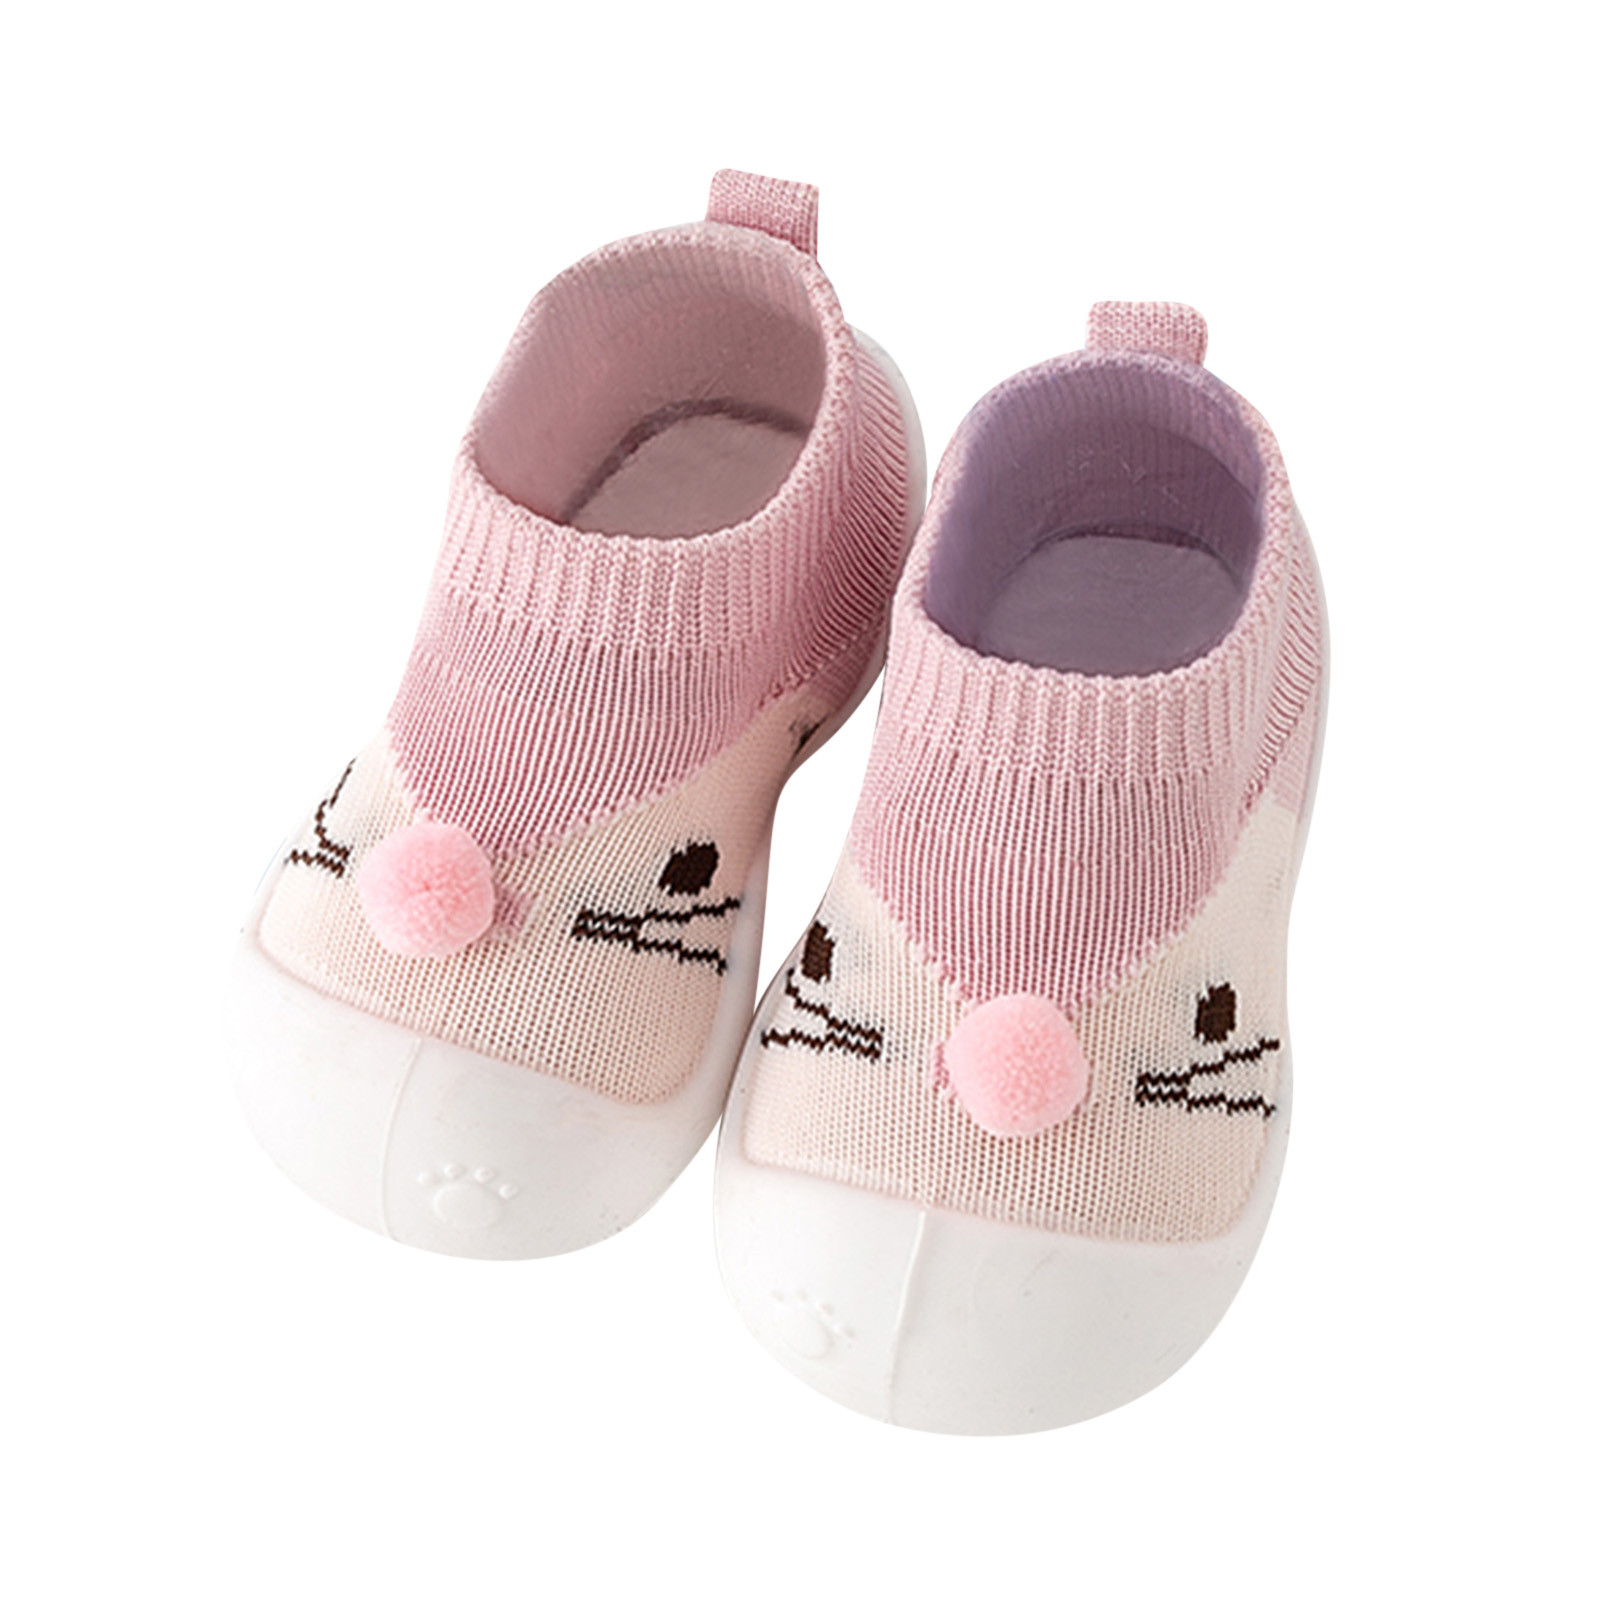 Hbdhejl Soft Shoes For Baby Infant Toddler Girls Boys Kids Cartoon ...